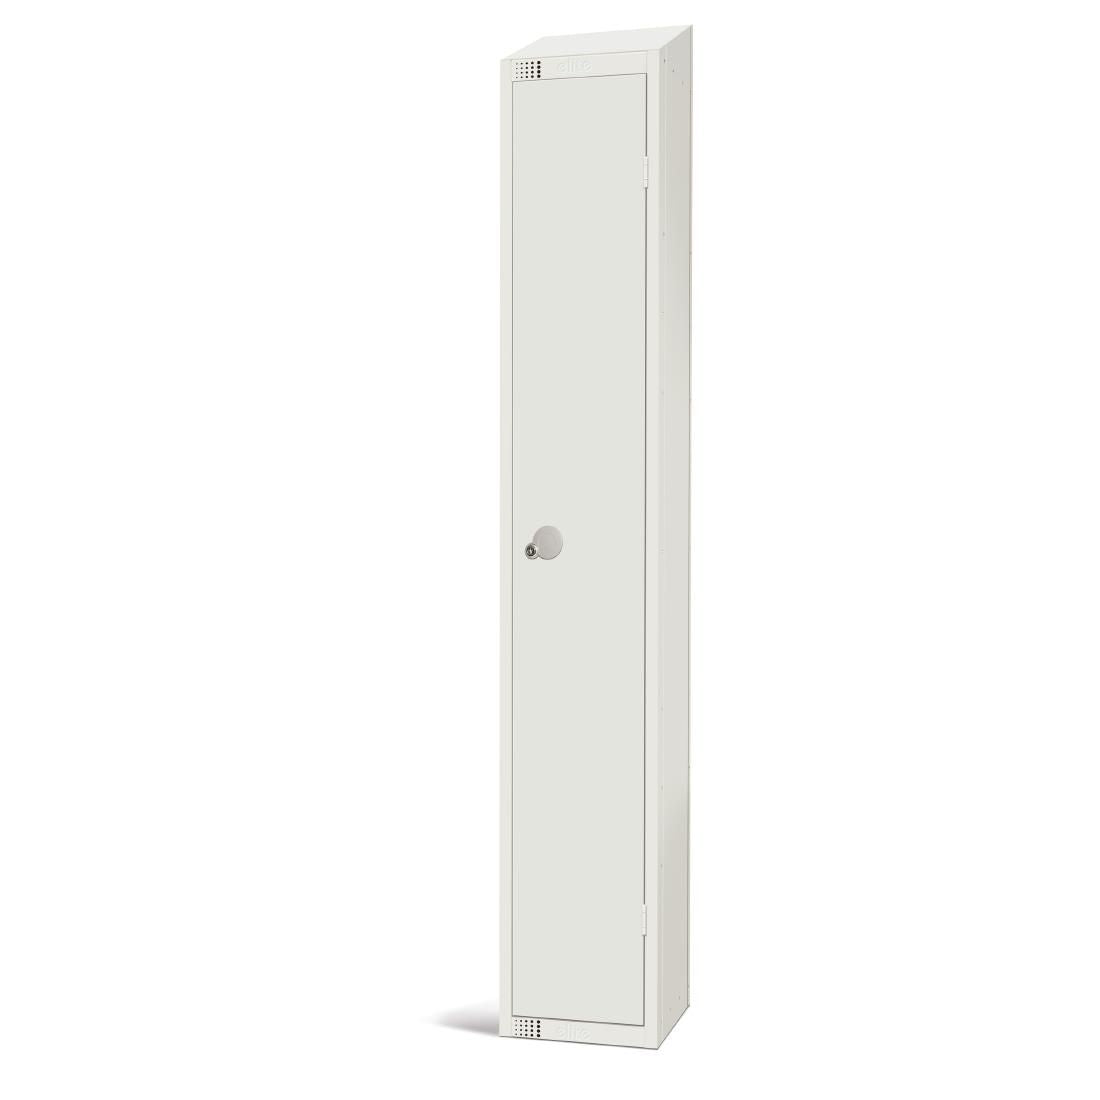 Elite Single Door Manual Combination Locker with Sloping Top JD Catering Equipment Solutions Ltd